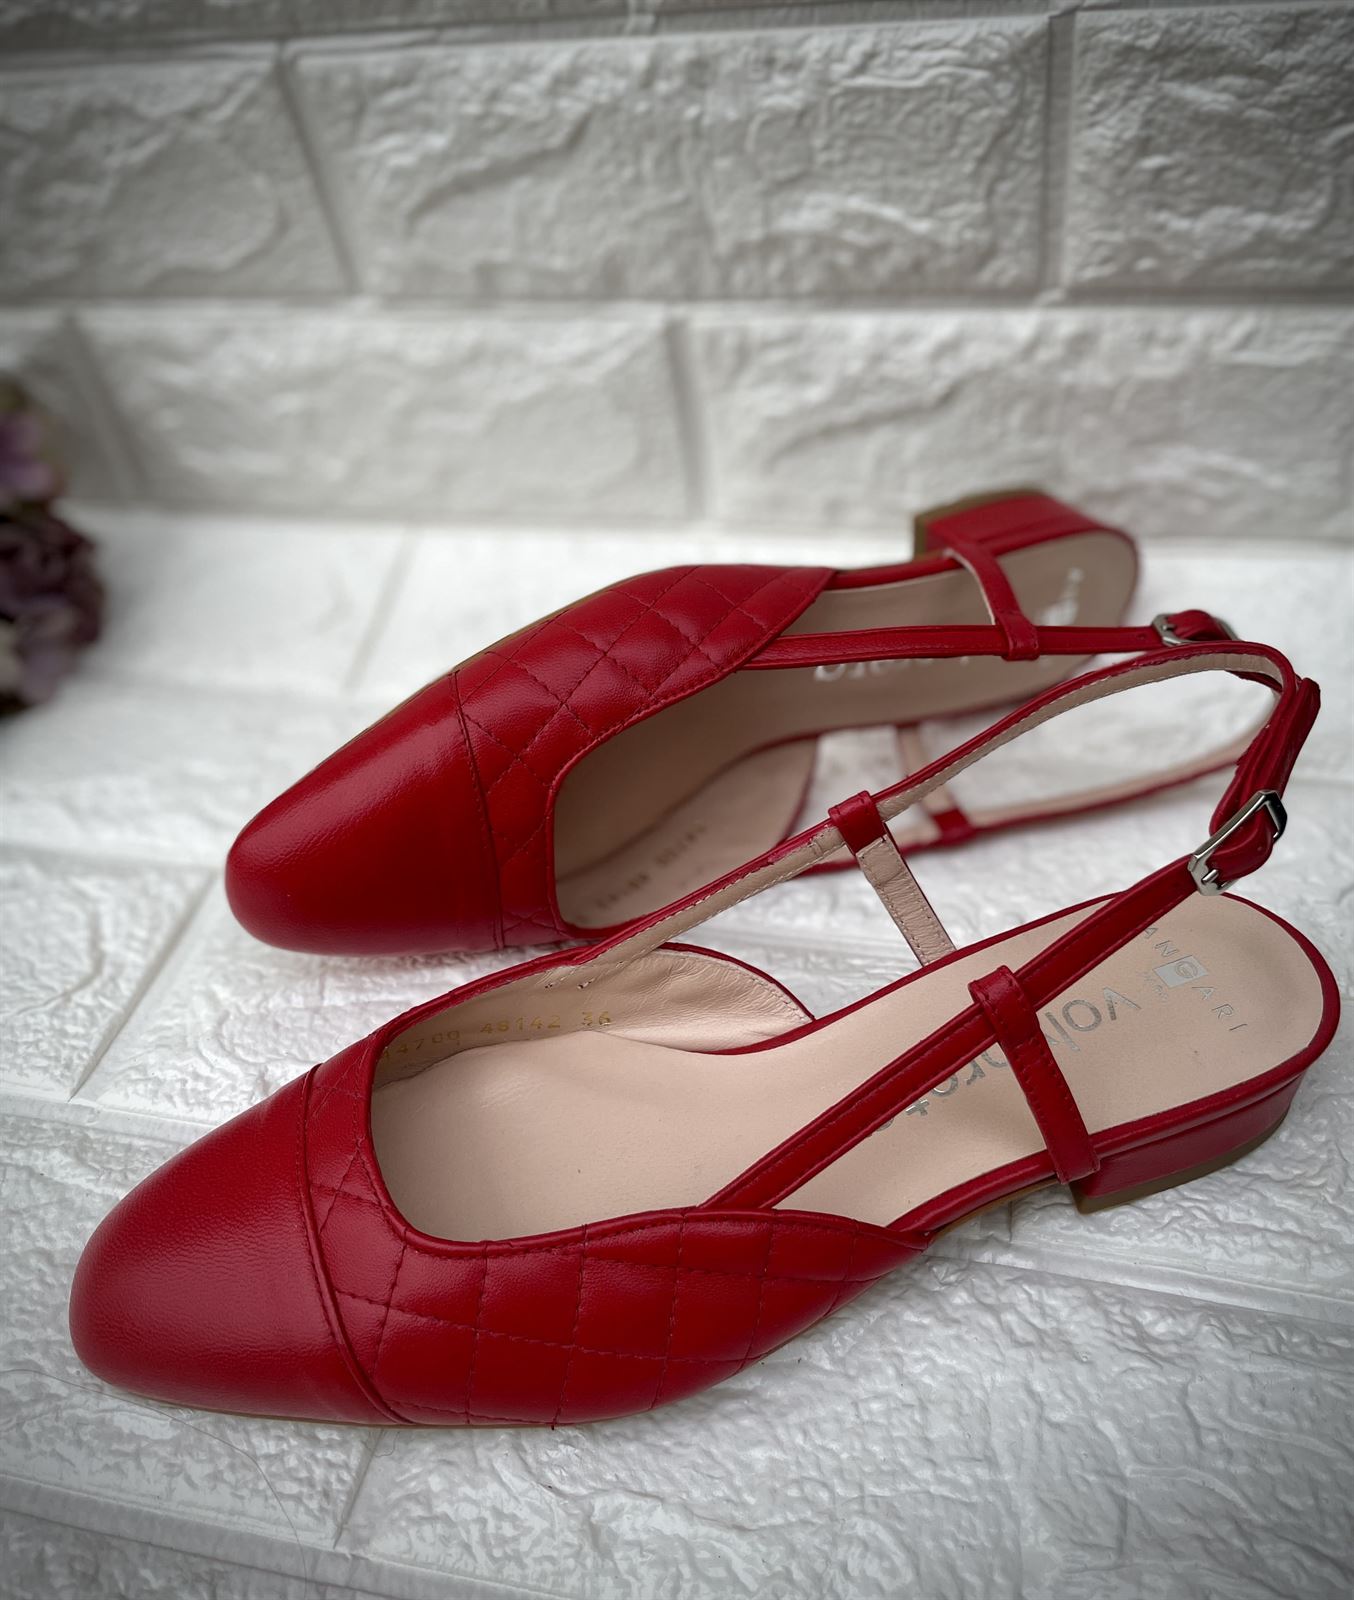 Zapatos Angari bailarinas puntera roja - Imagen 4